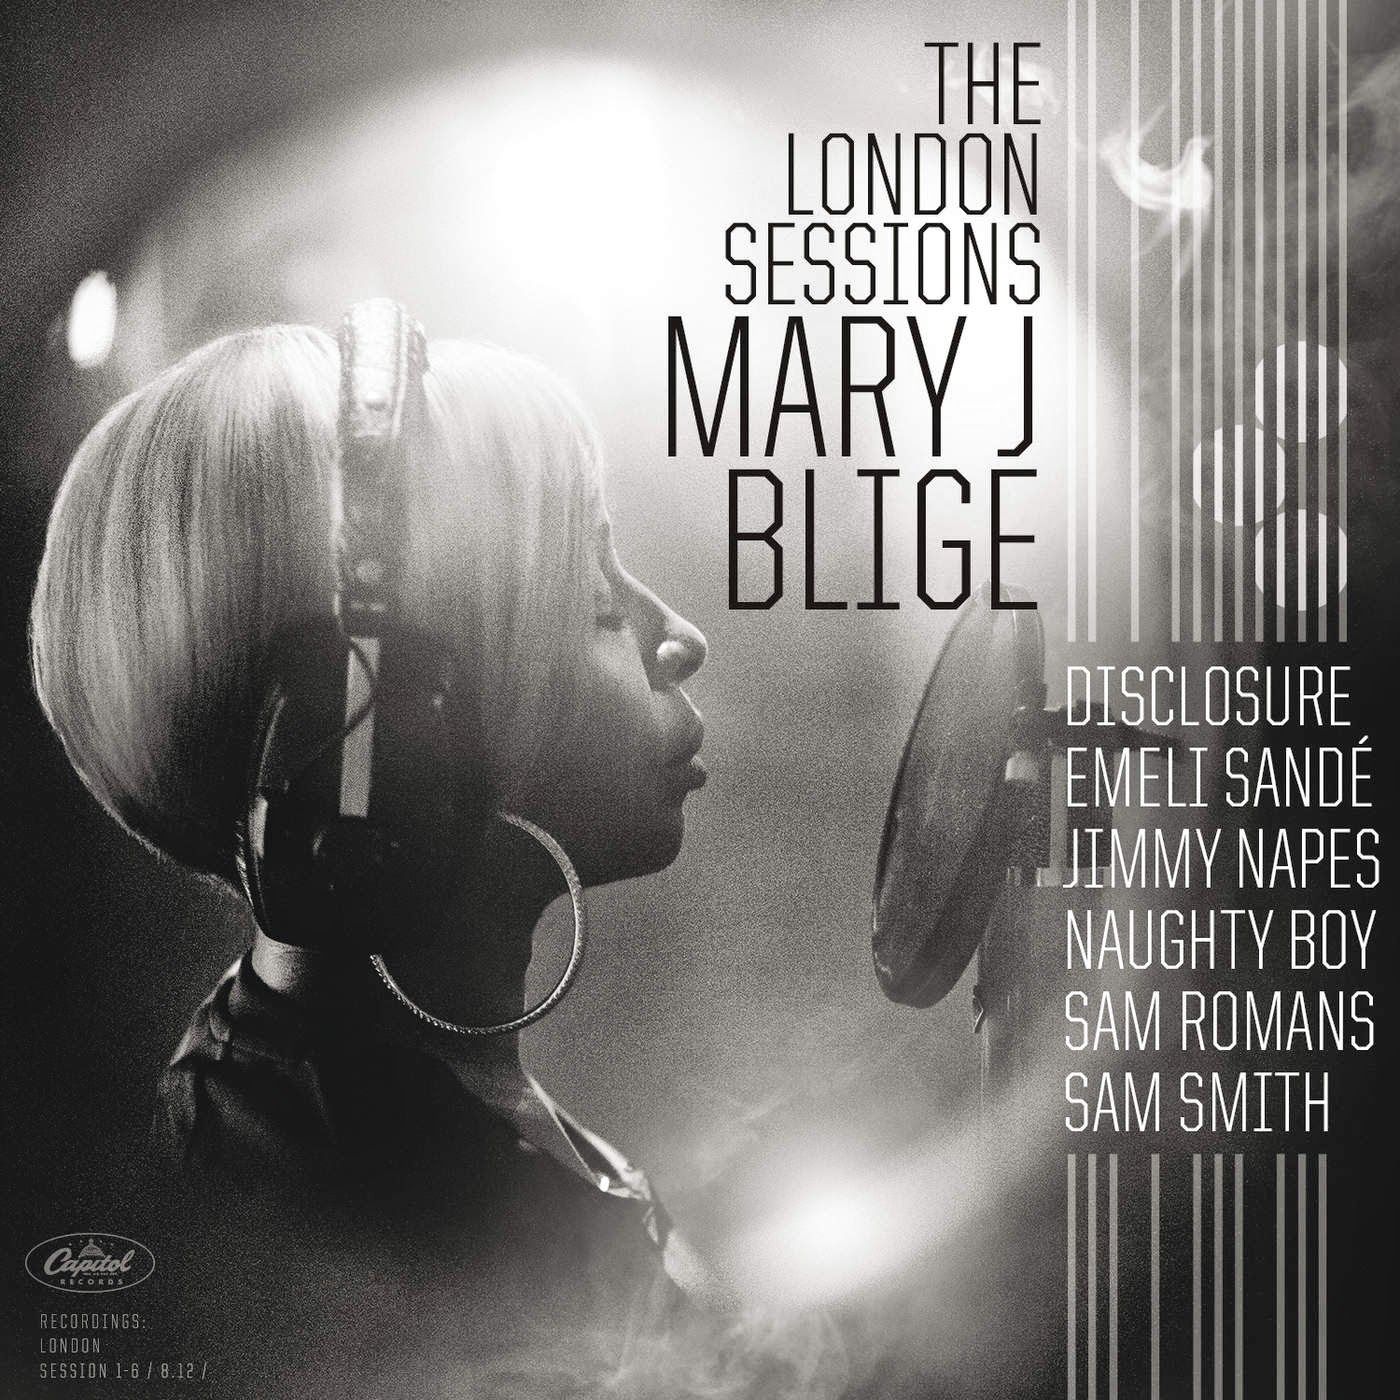 Imagem do álbum The London Sessions do(a) artista Mary J. Blige